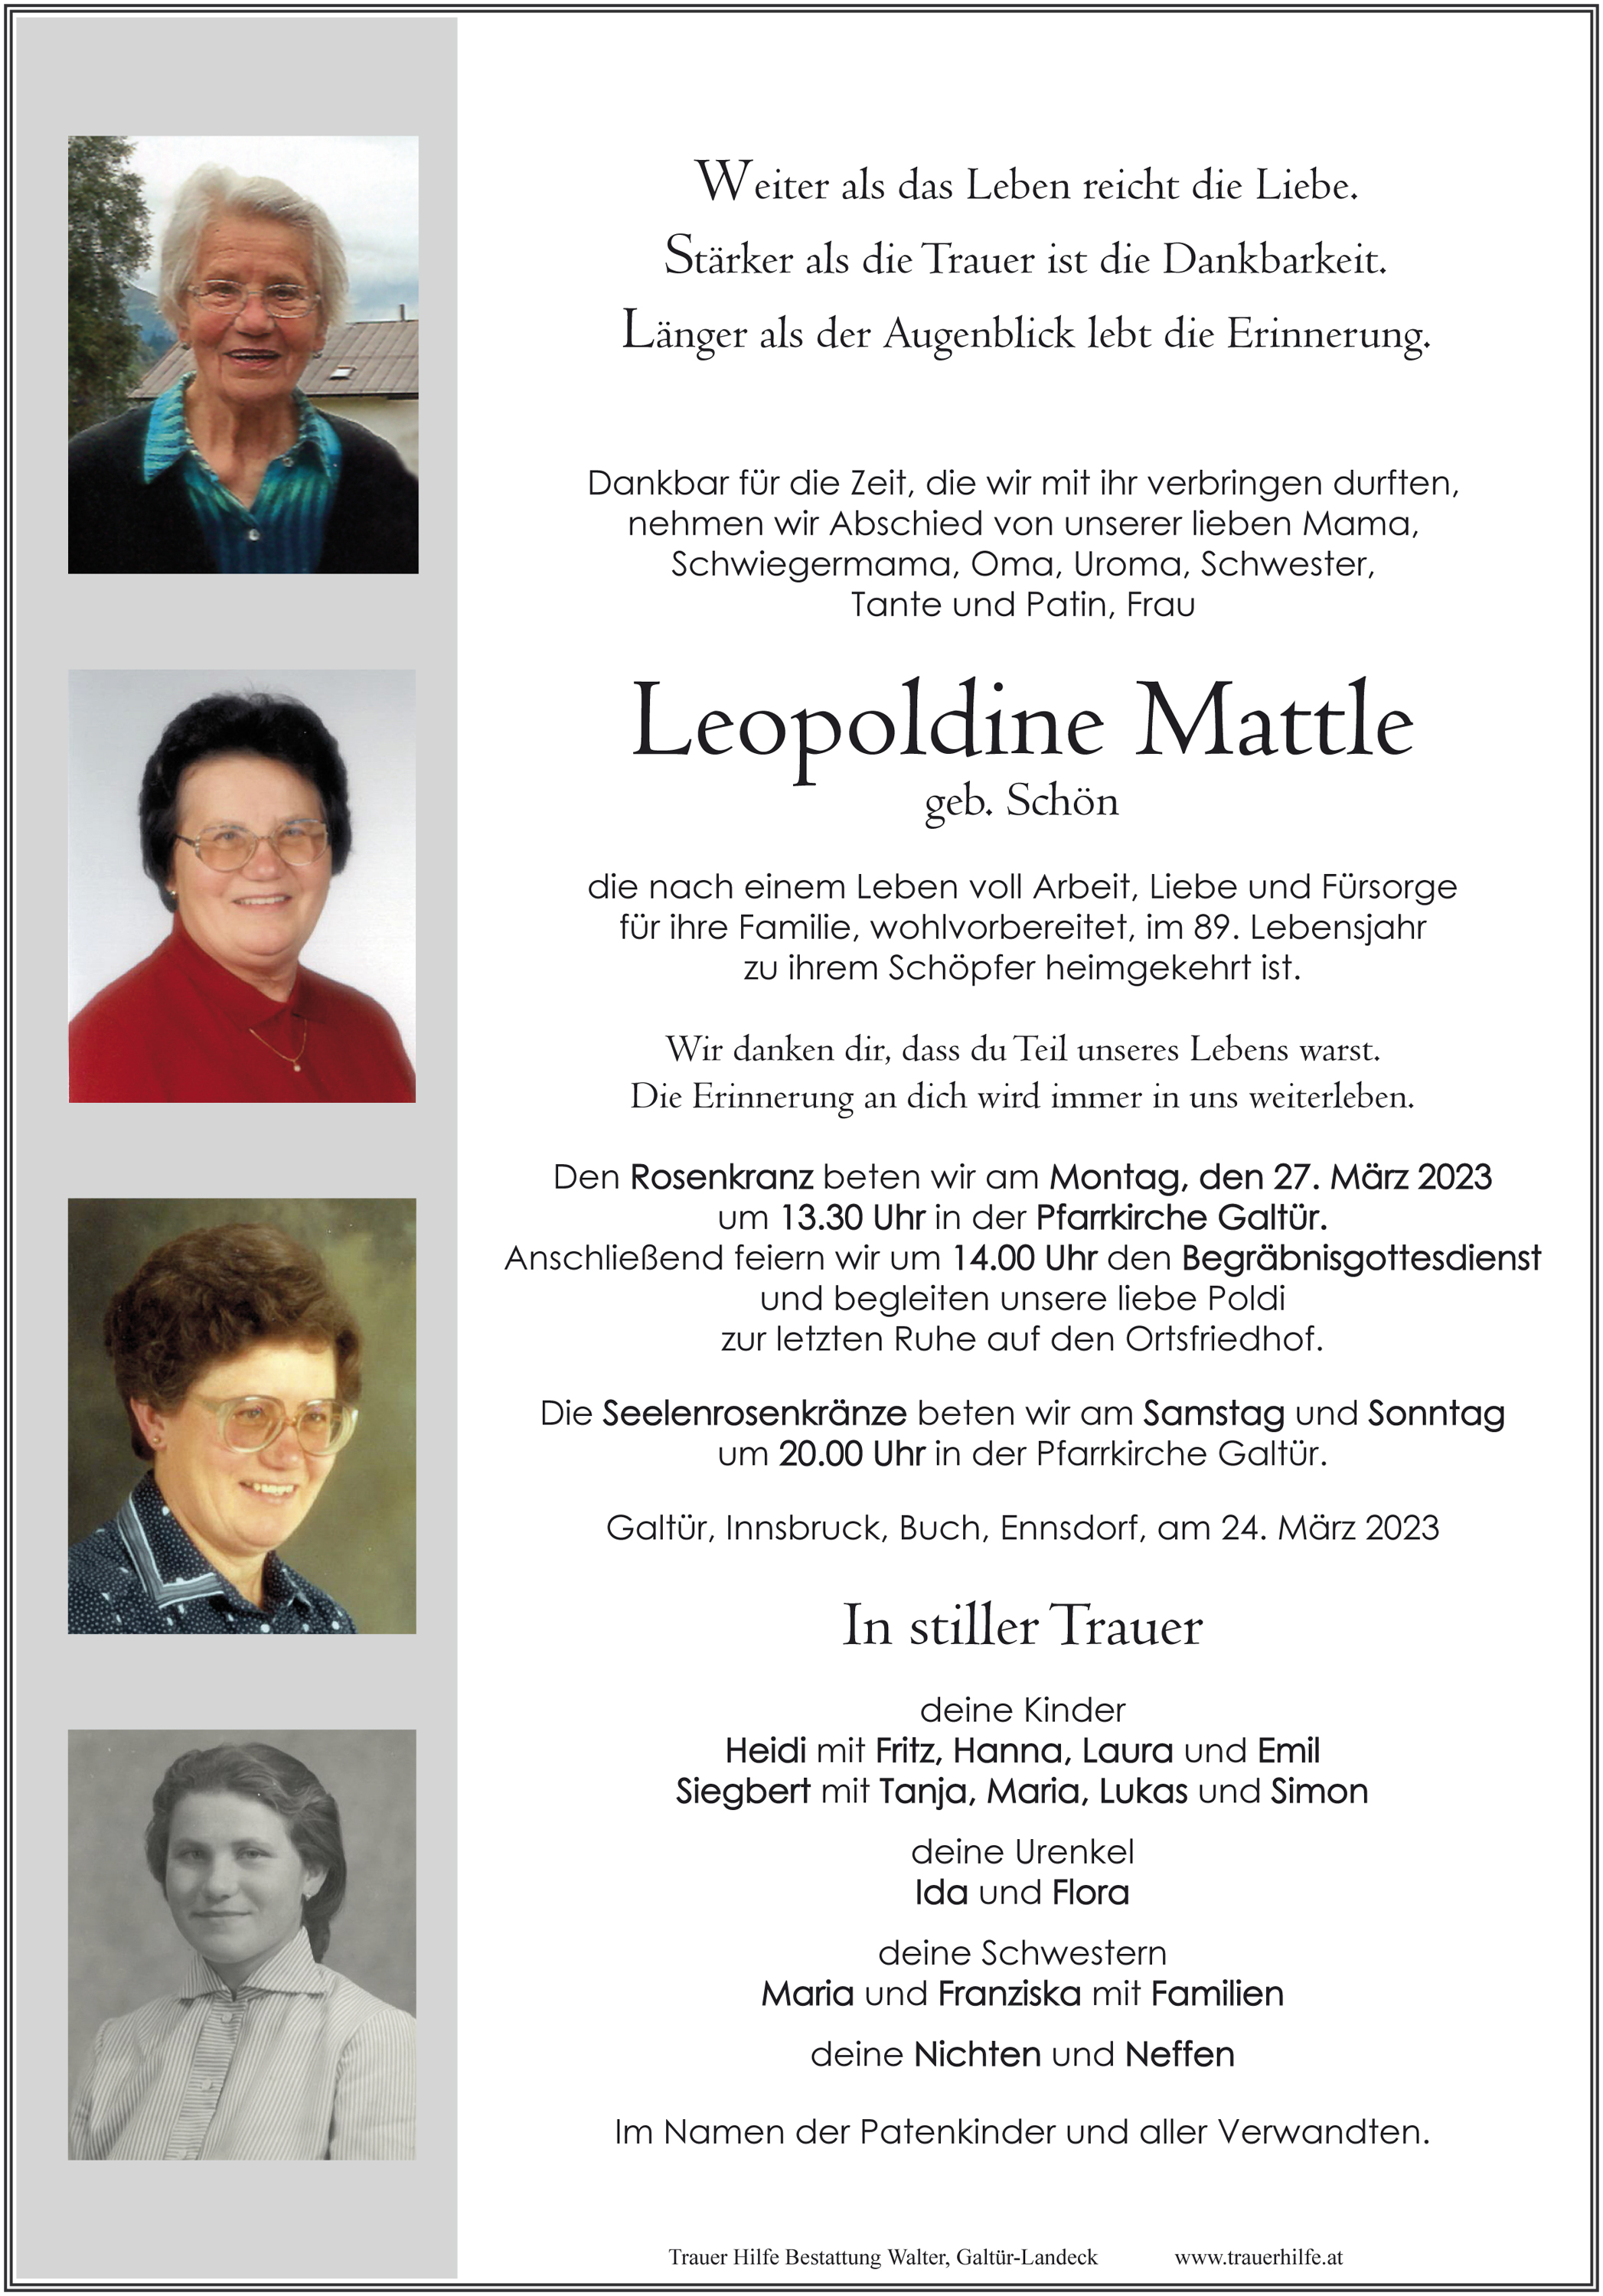 Leopoldine Mattle